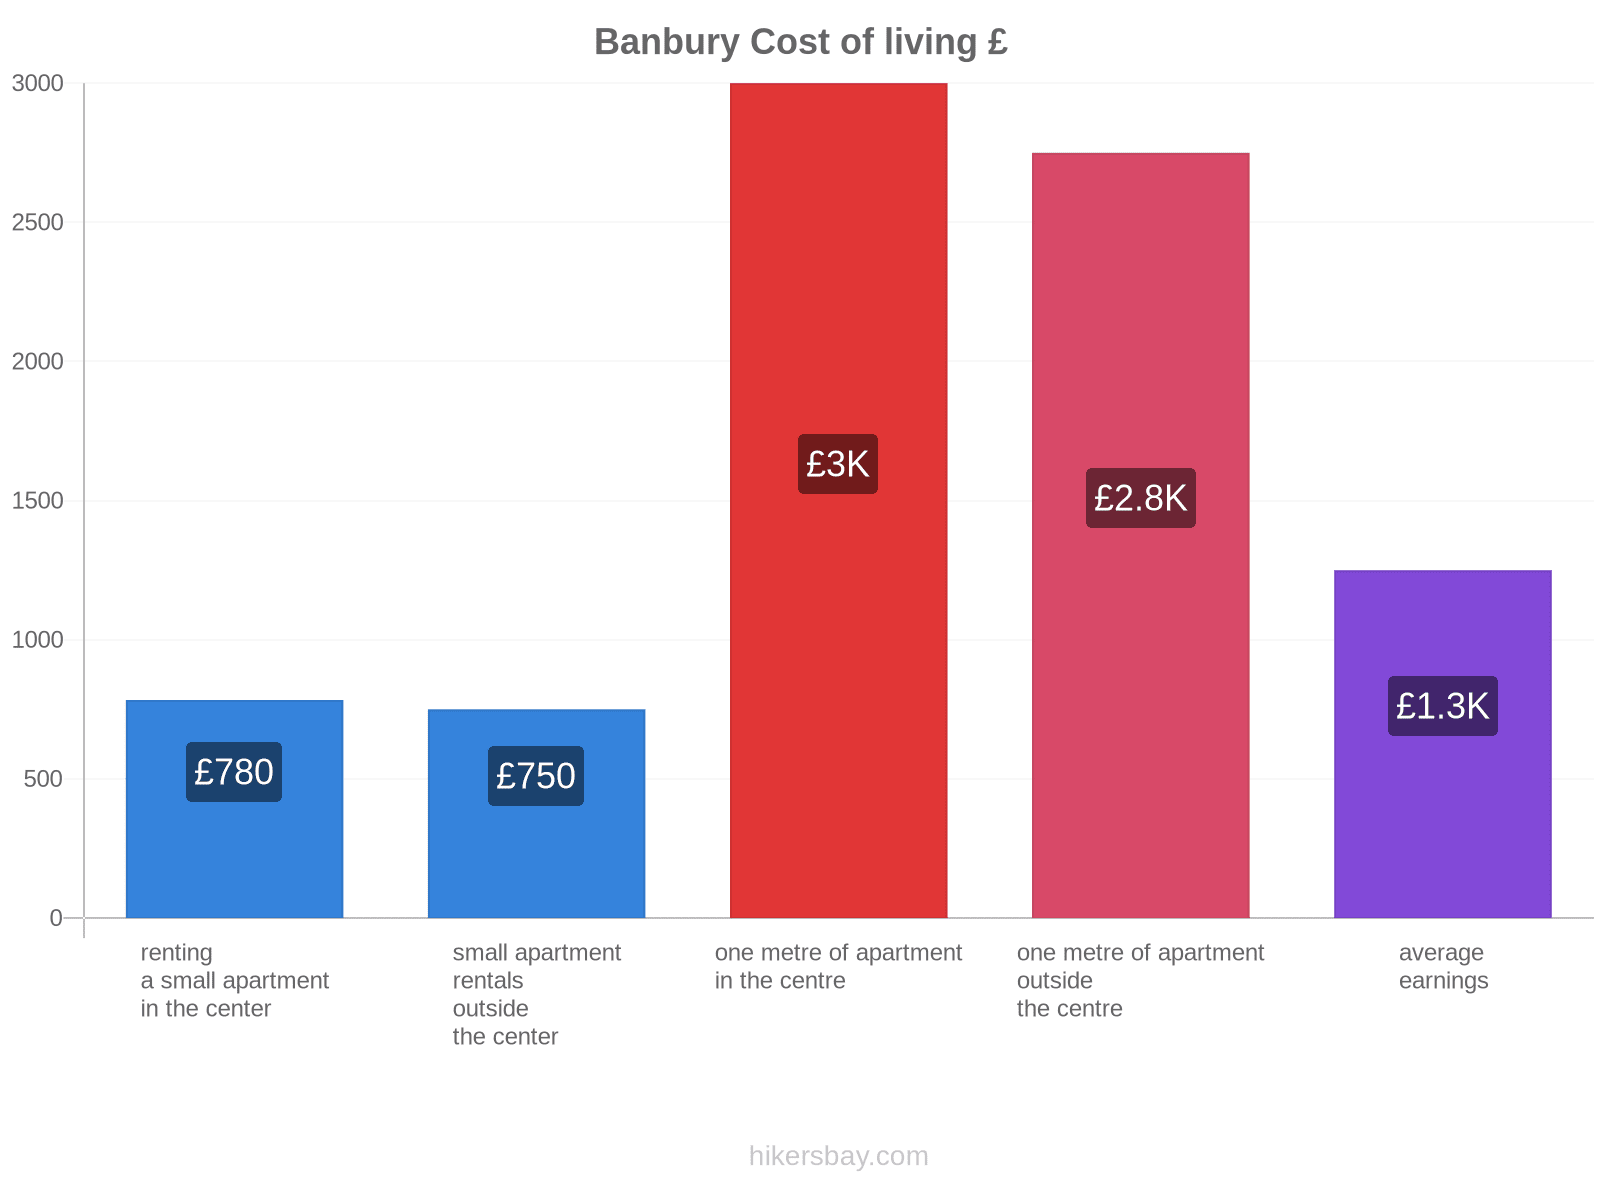 Banbury cost of living hikersbay.com